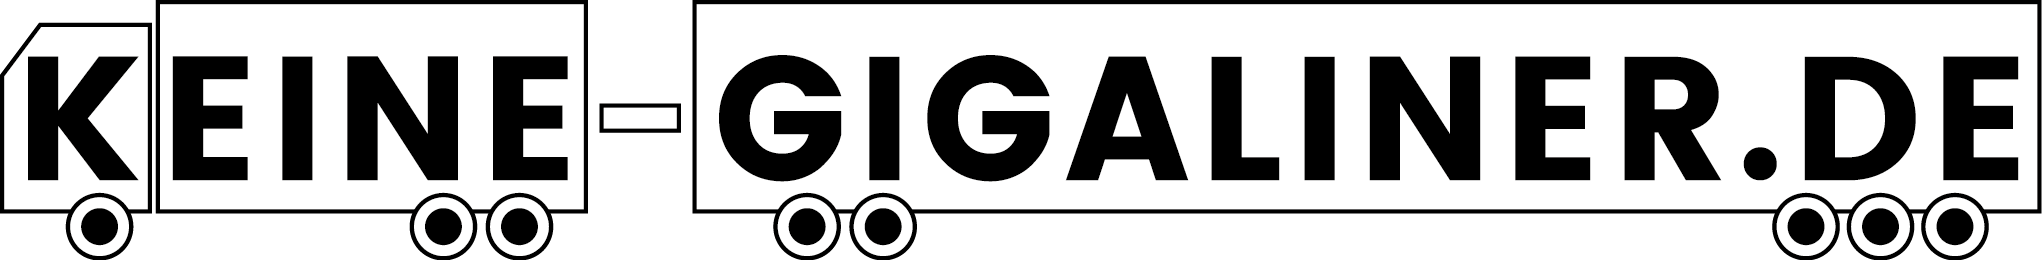 Keine-Gigaliner.de Logo